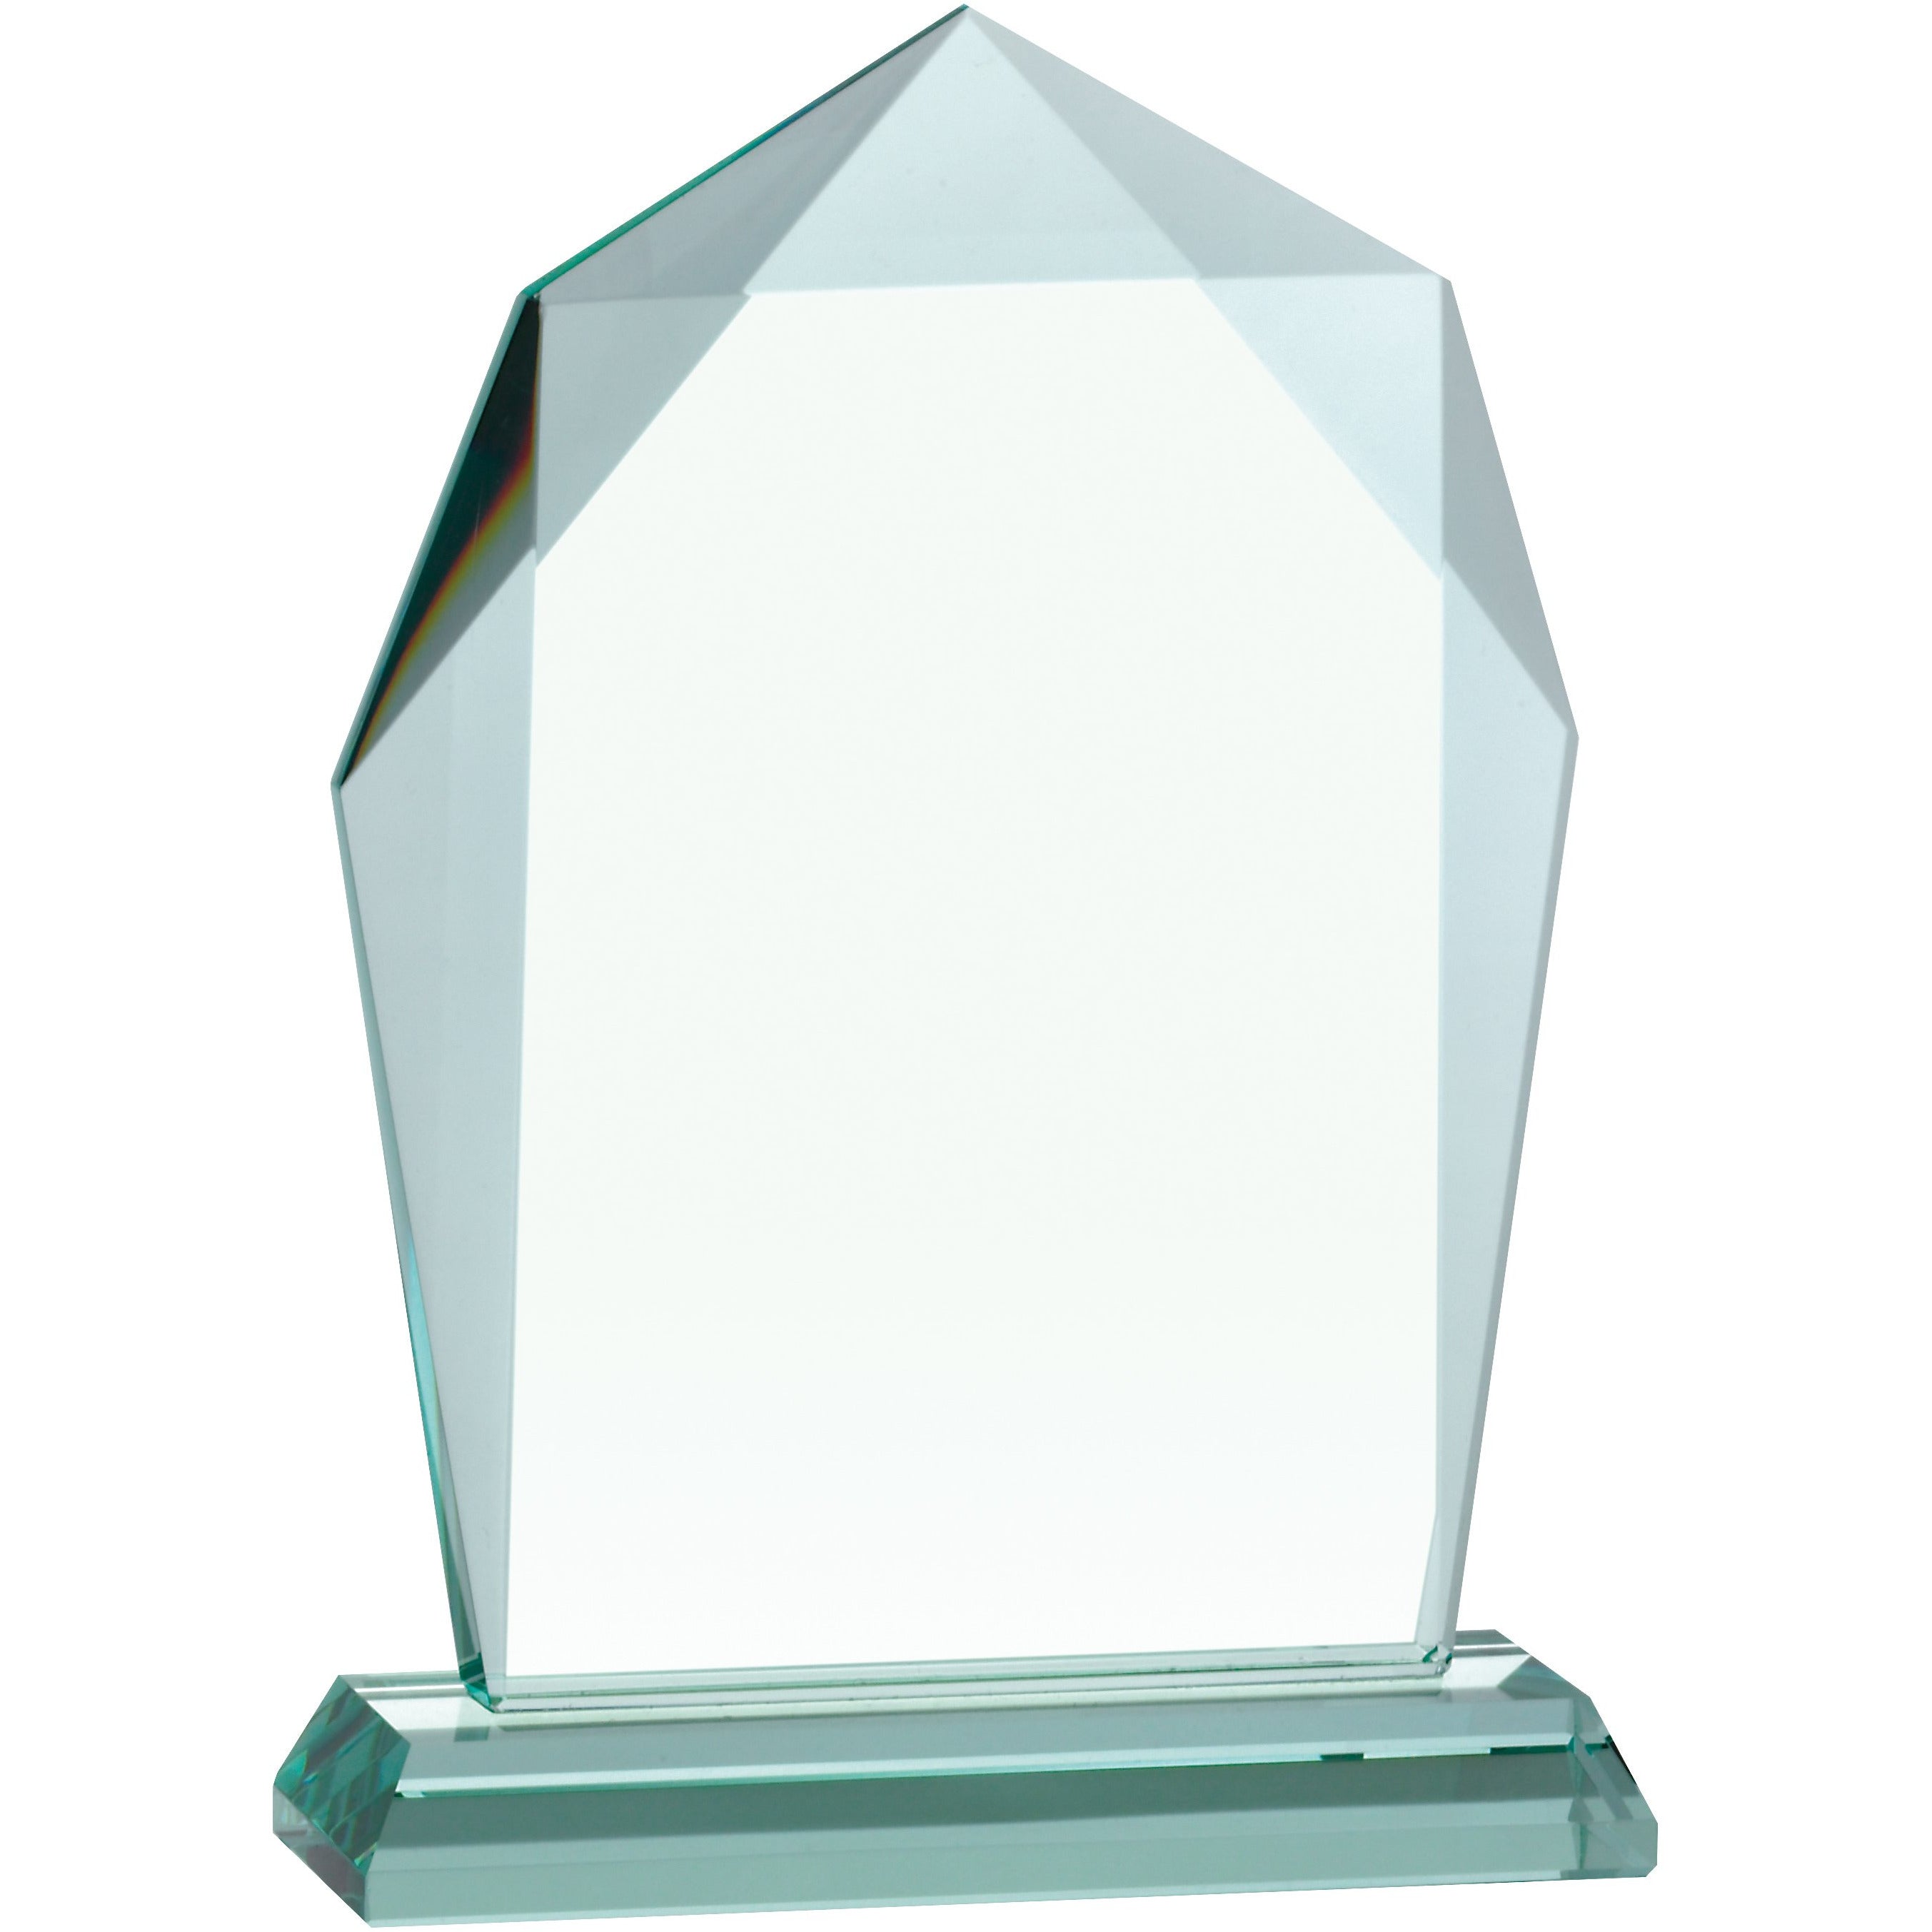 Jade Glass Peak Award